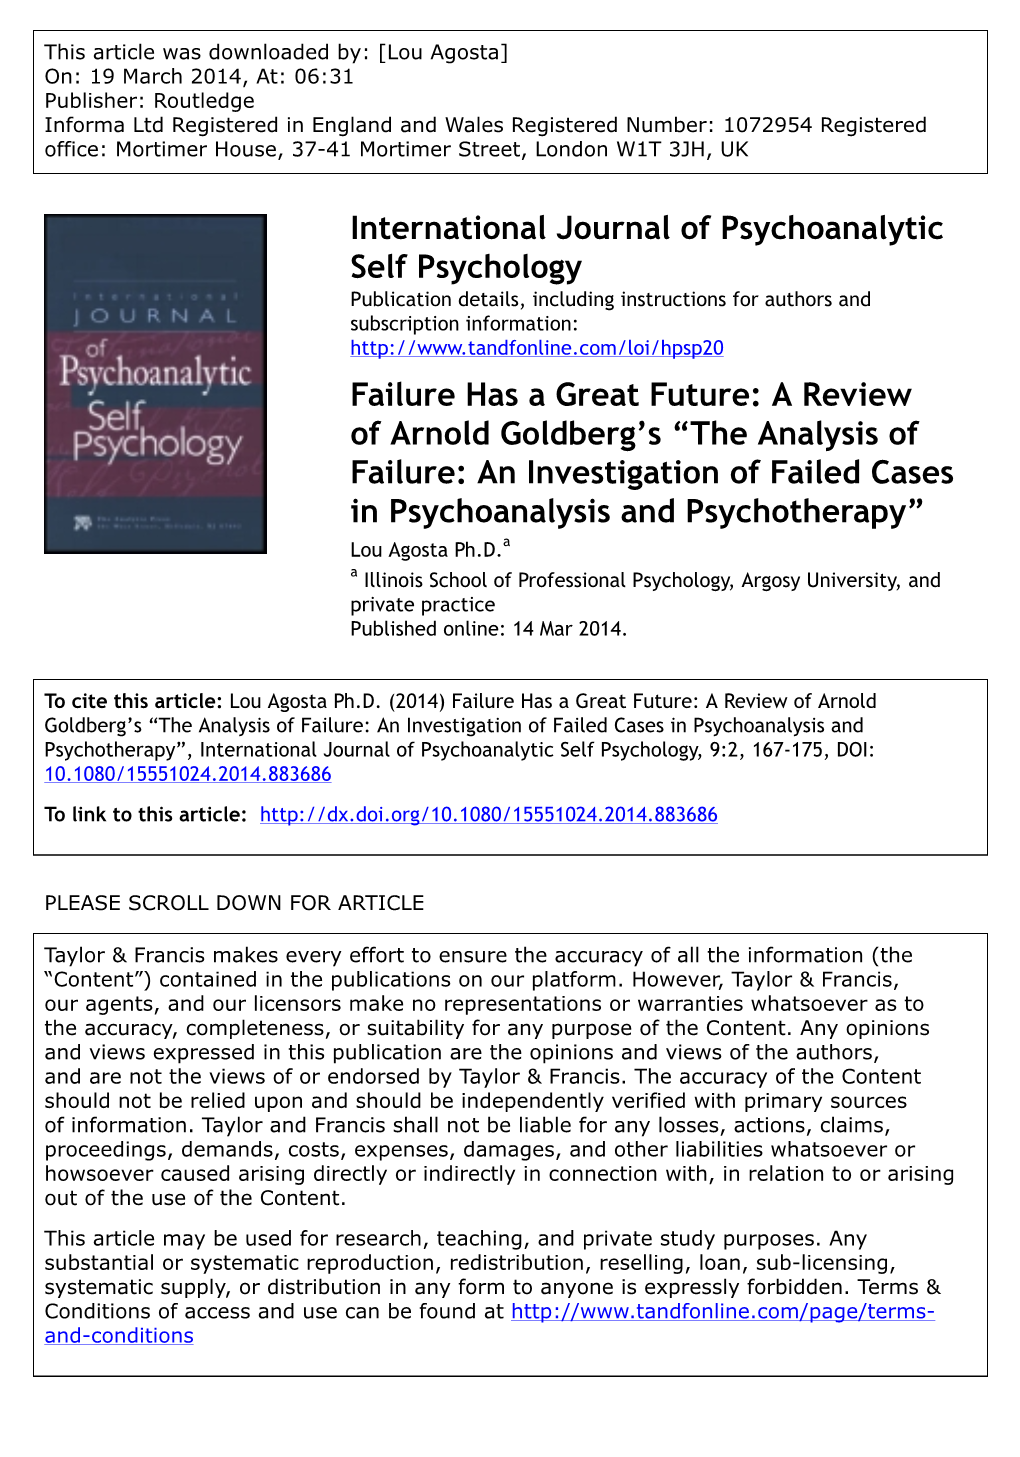 International Journal of Psychoanalytic Self Psychology